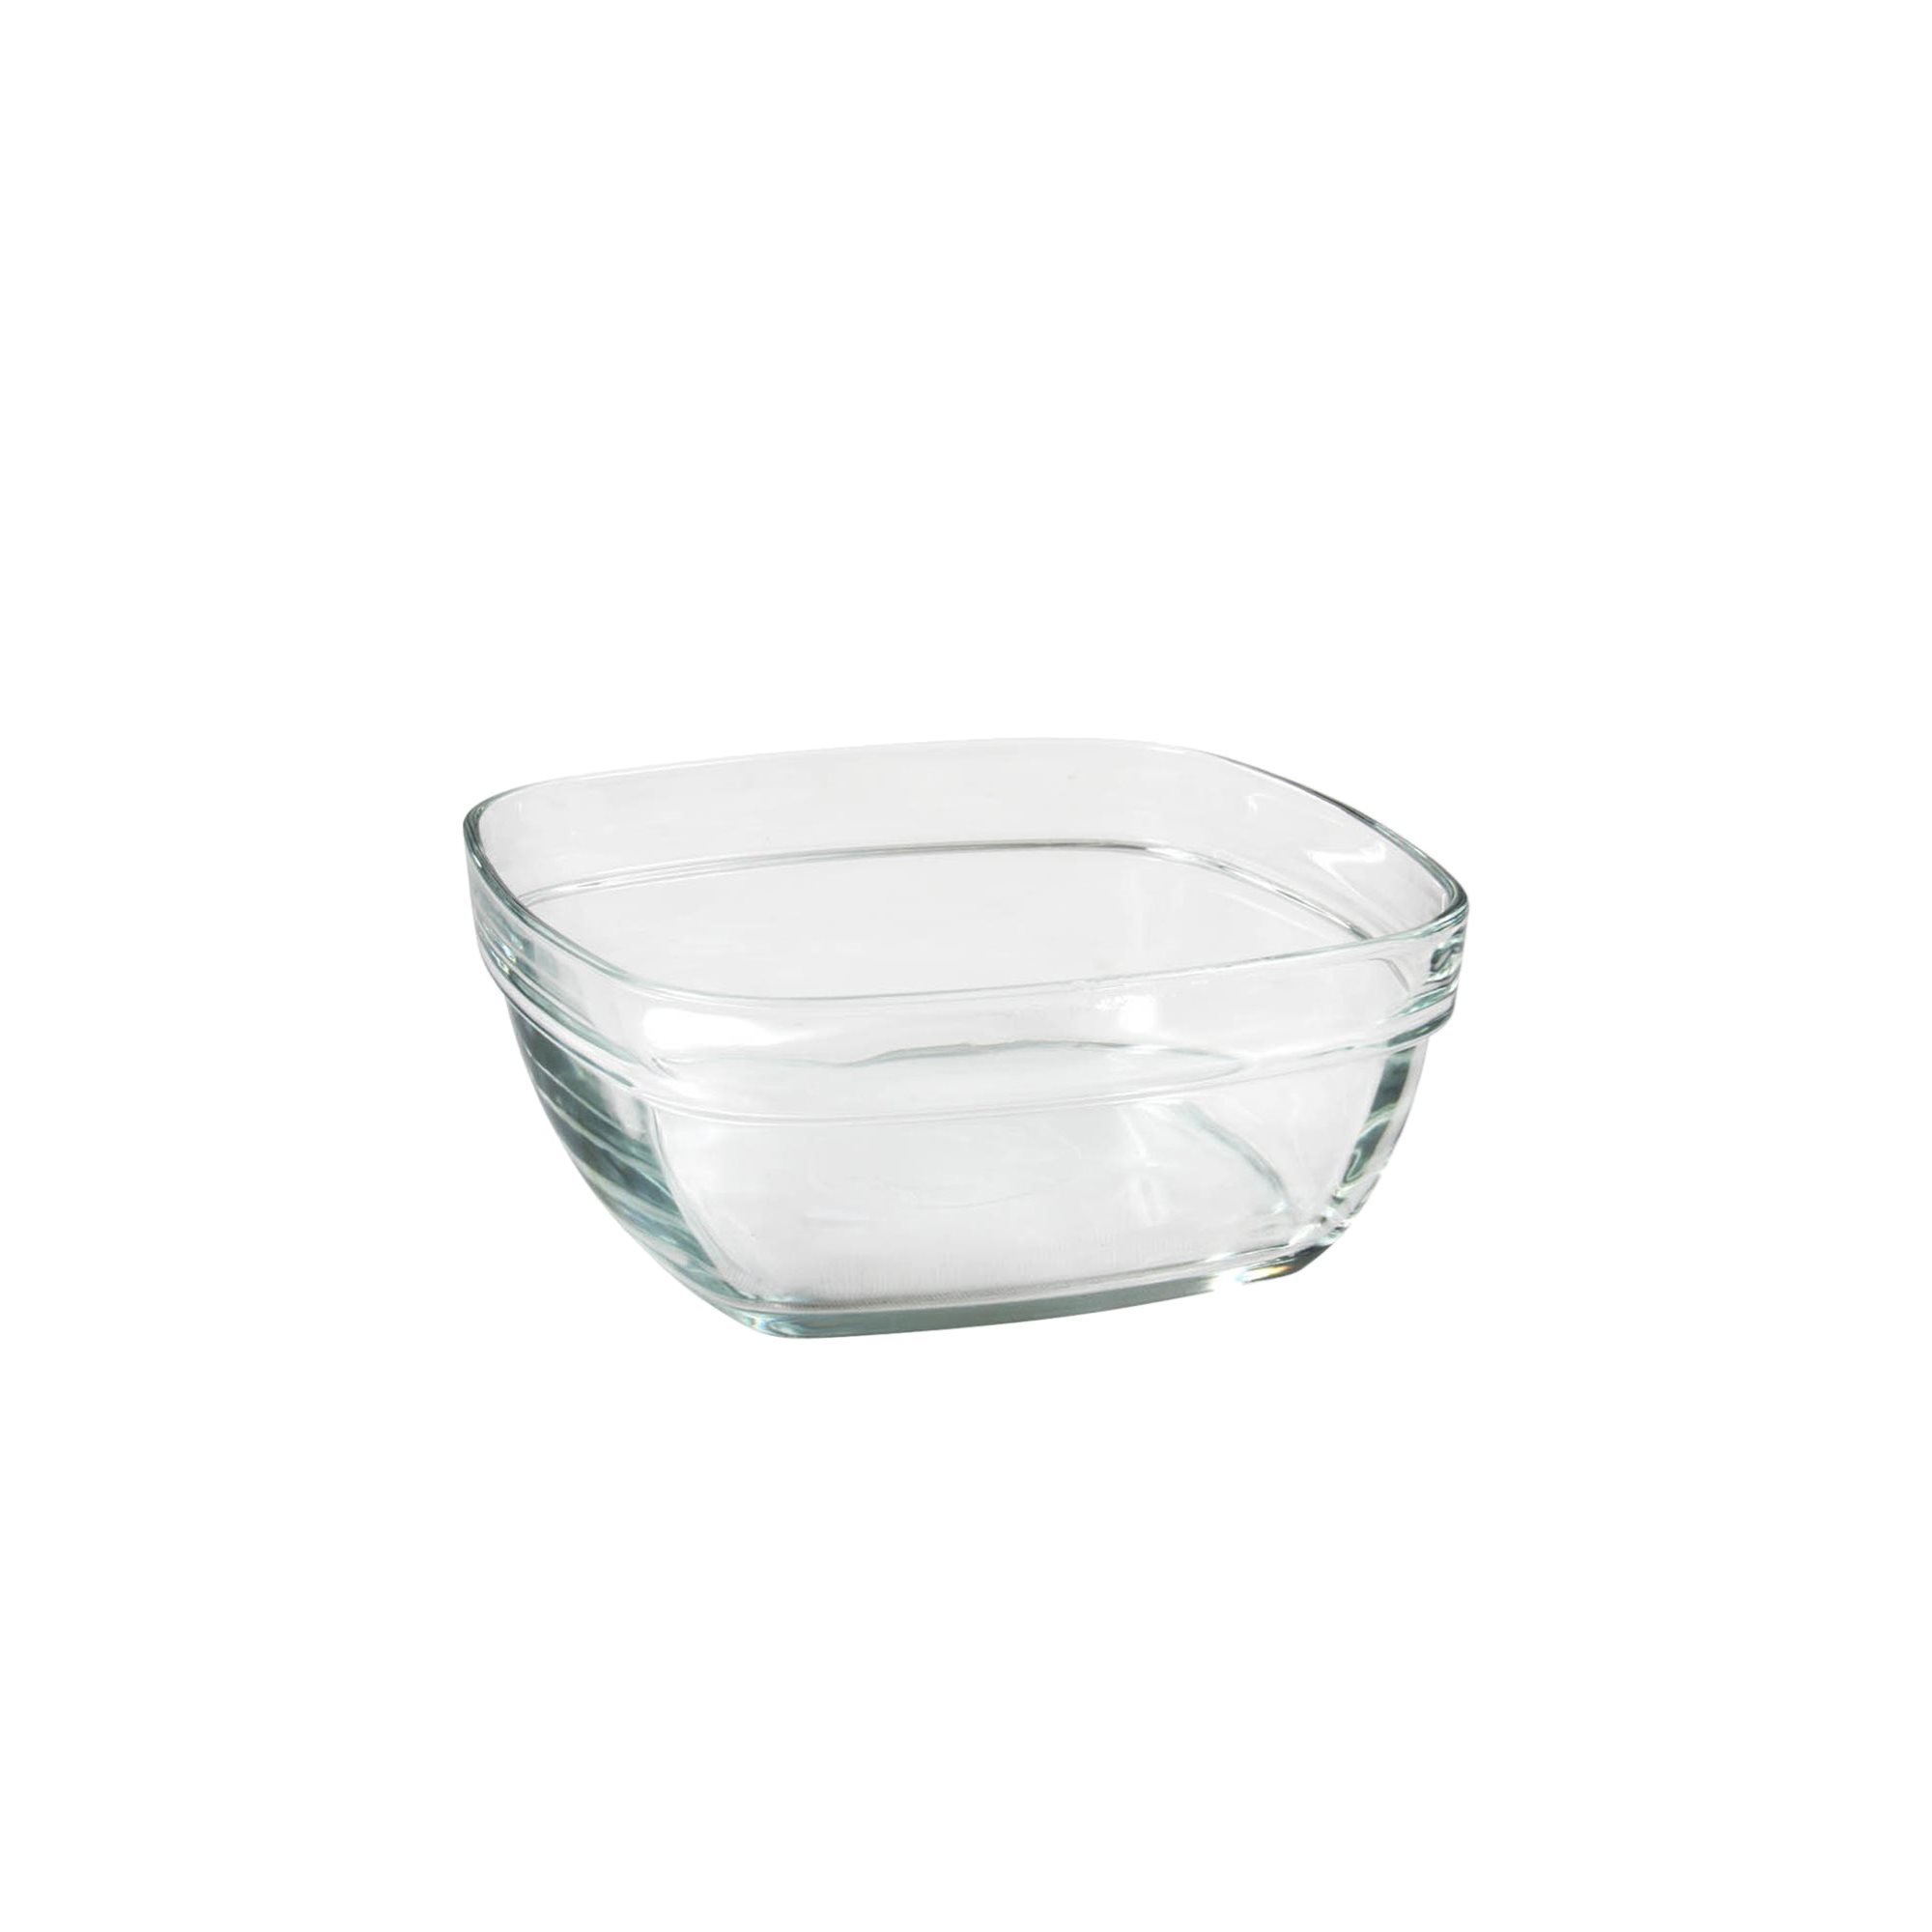 James Dyson Señor tubo respirador Square bowl, made from glass, 11 × 11 cm / 300 ml, "Lys" - Duralex |  KitchenShop